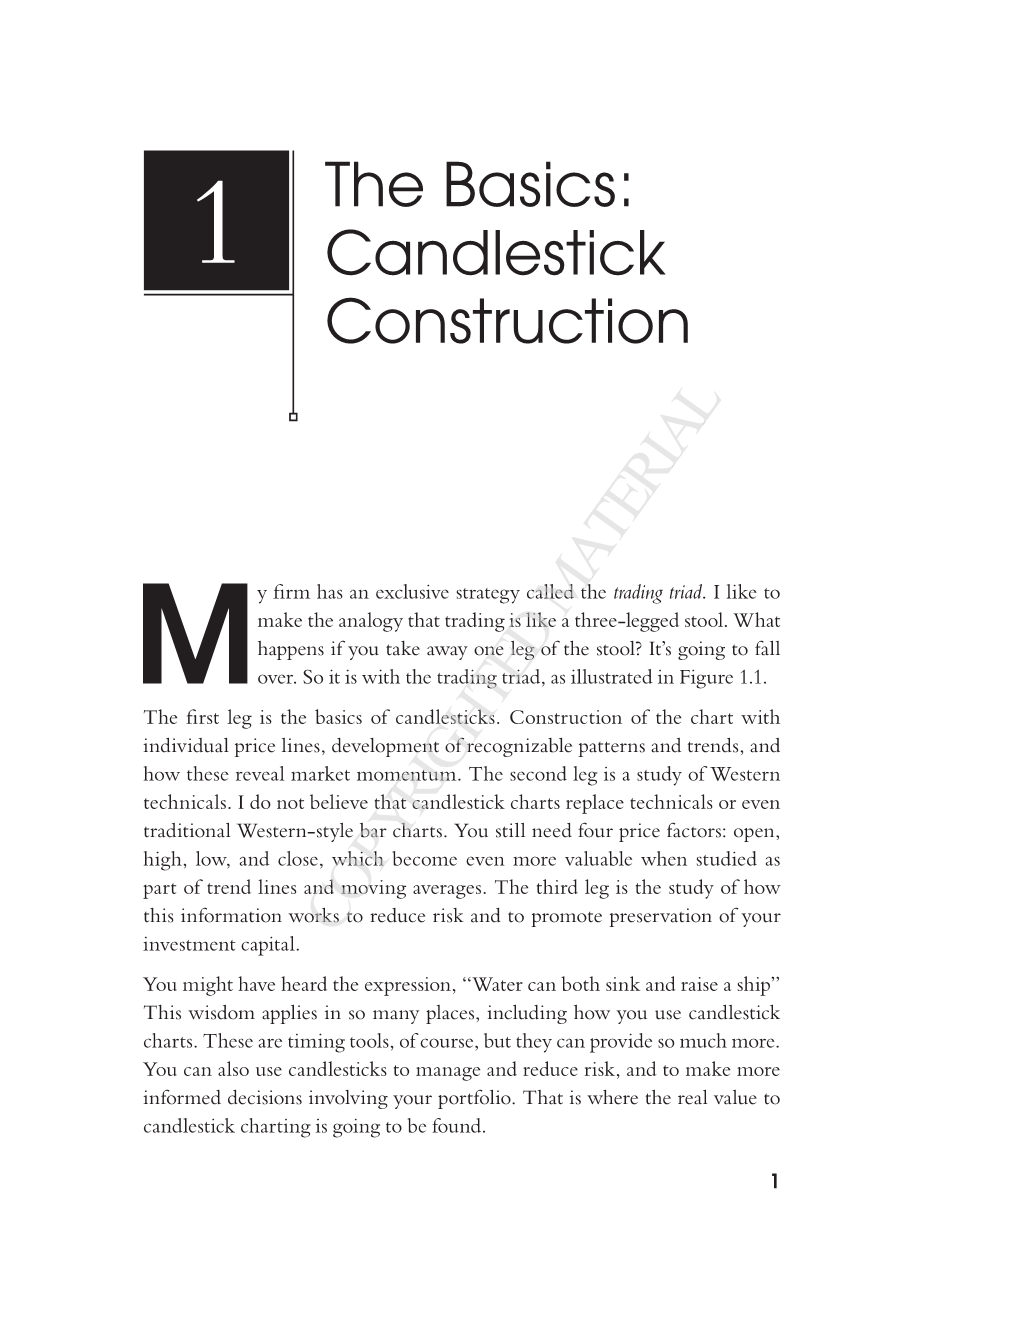 1 the Basics: Candlestick Construction